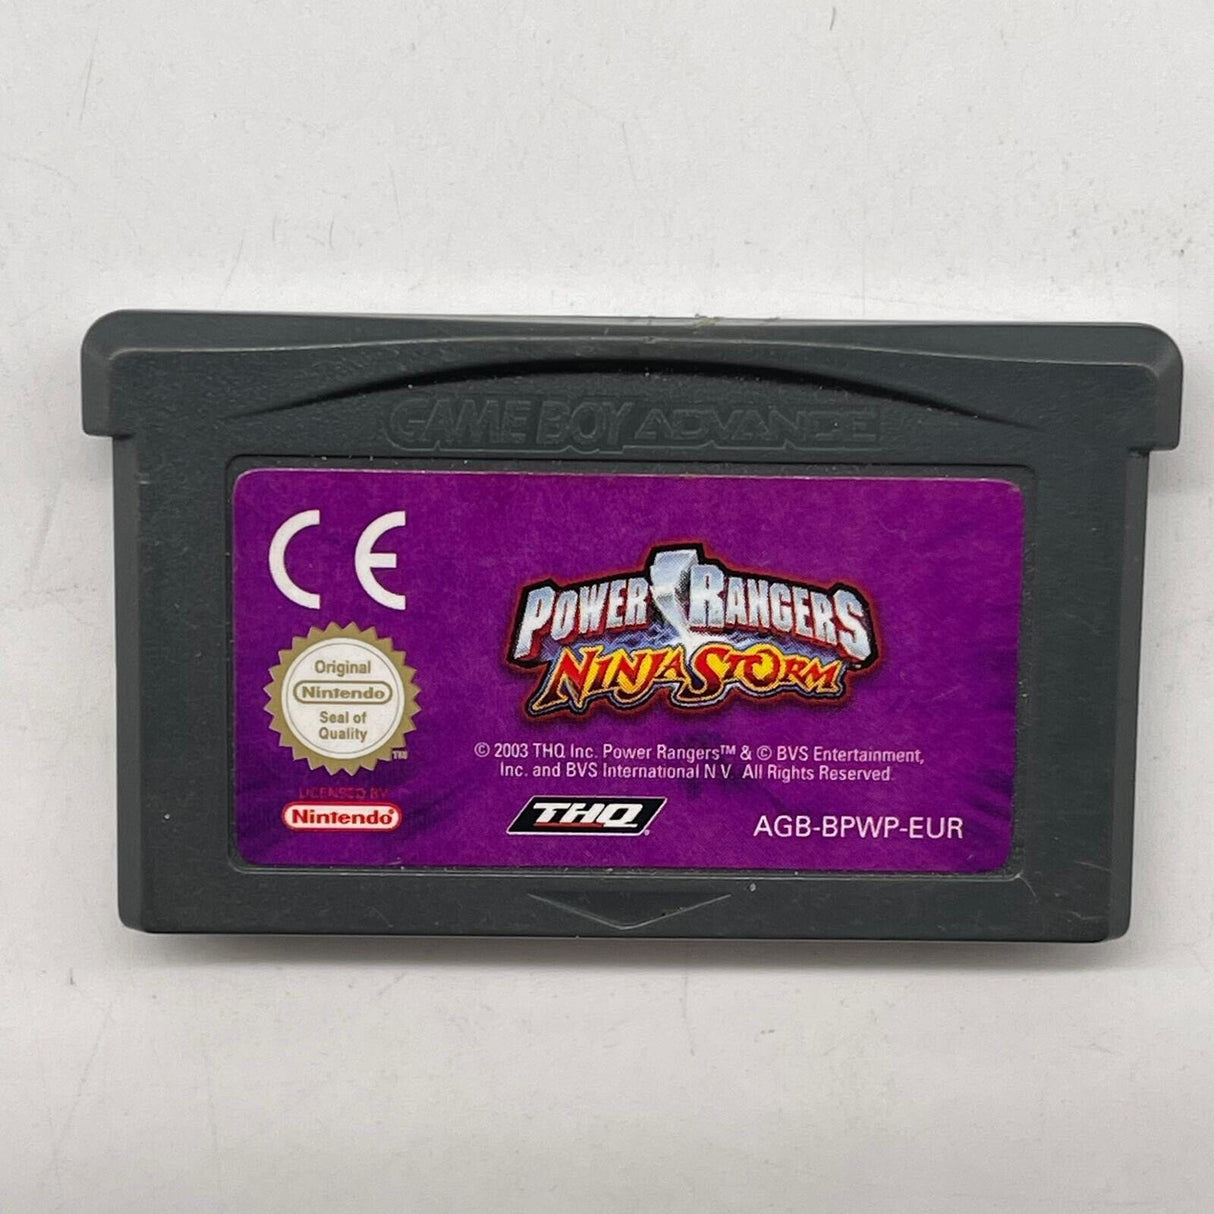 Power Rangers Ninja Storm Game Boy Advance Game Cartridge 24d3